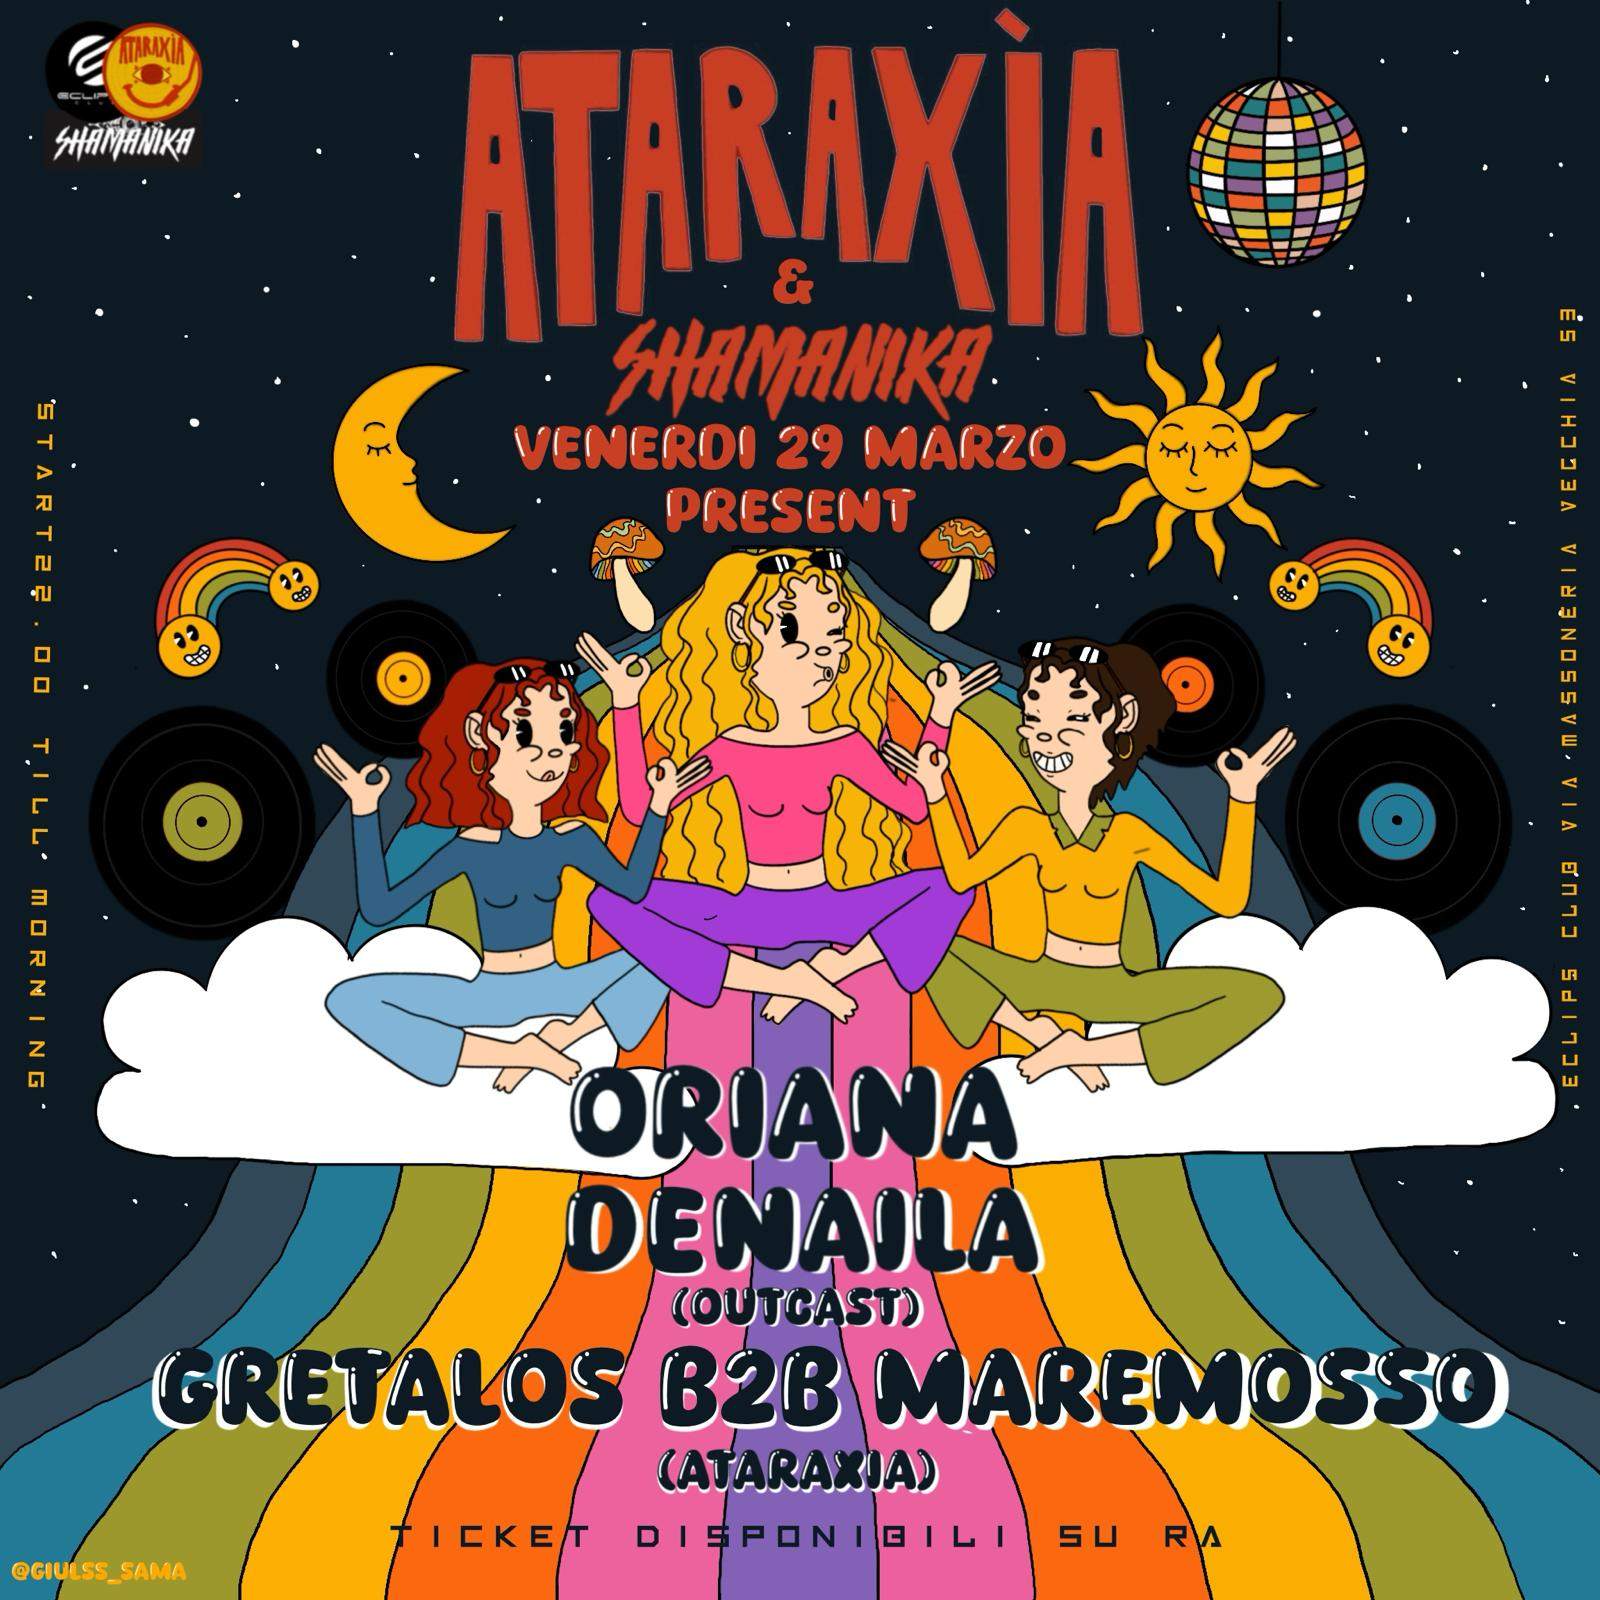 Ataraxìa & Shamanika present: Oriana, Denaila (Outcast), Gretalos b2b Maremosso + After-Party - フライヤー表